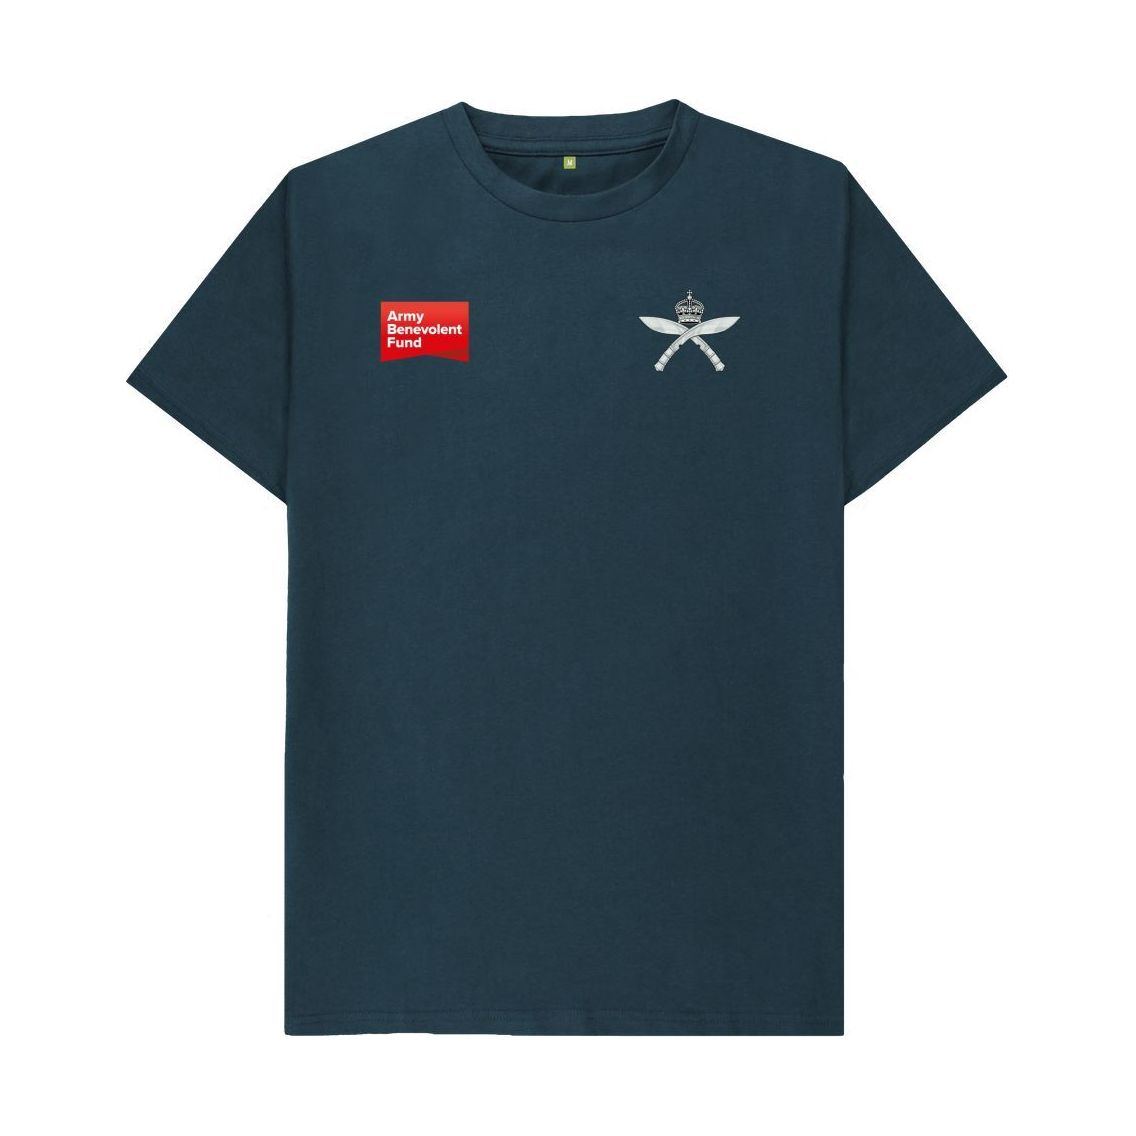 Royal Gurkha Rifles Unisex T-shirt - Army Benevolent Fund